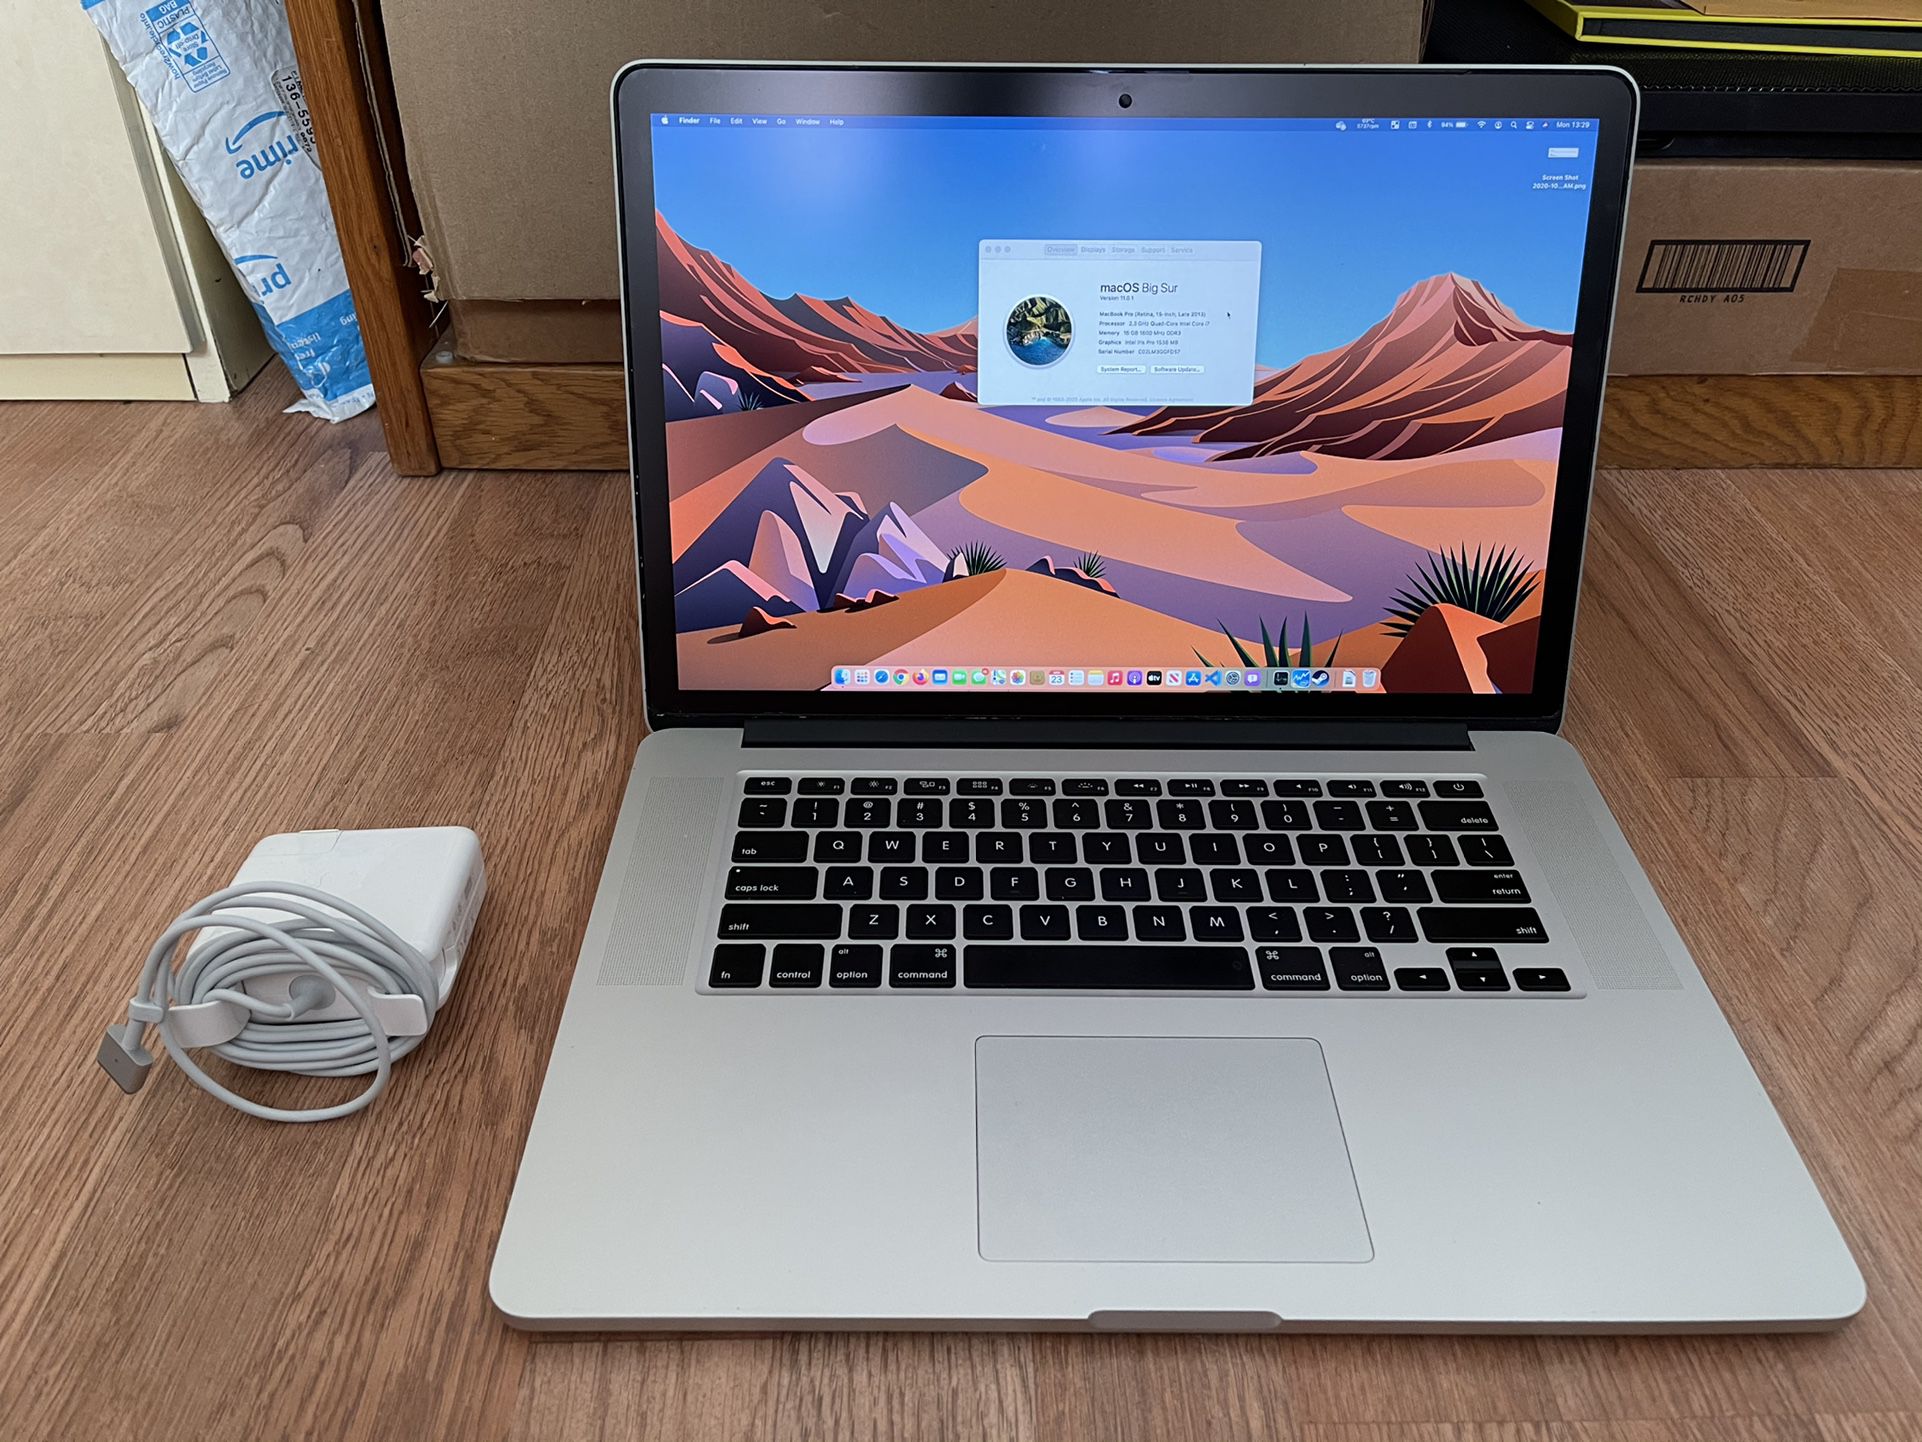 MacBook Pro (Retina, 15-inch), 2.3 GHz Quad Core i7, 16GB Ram, 512GB SSD - excellent shape